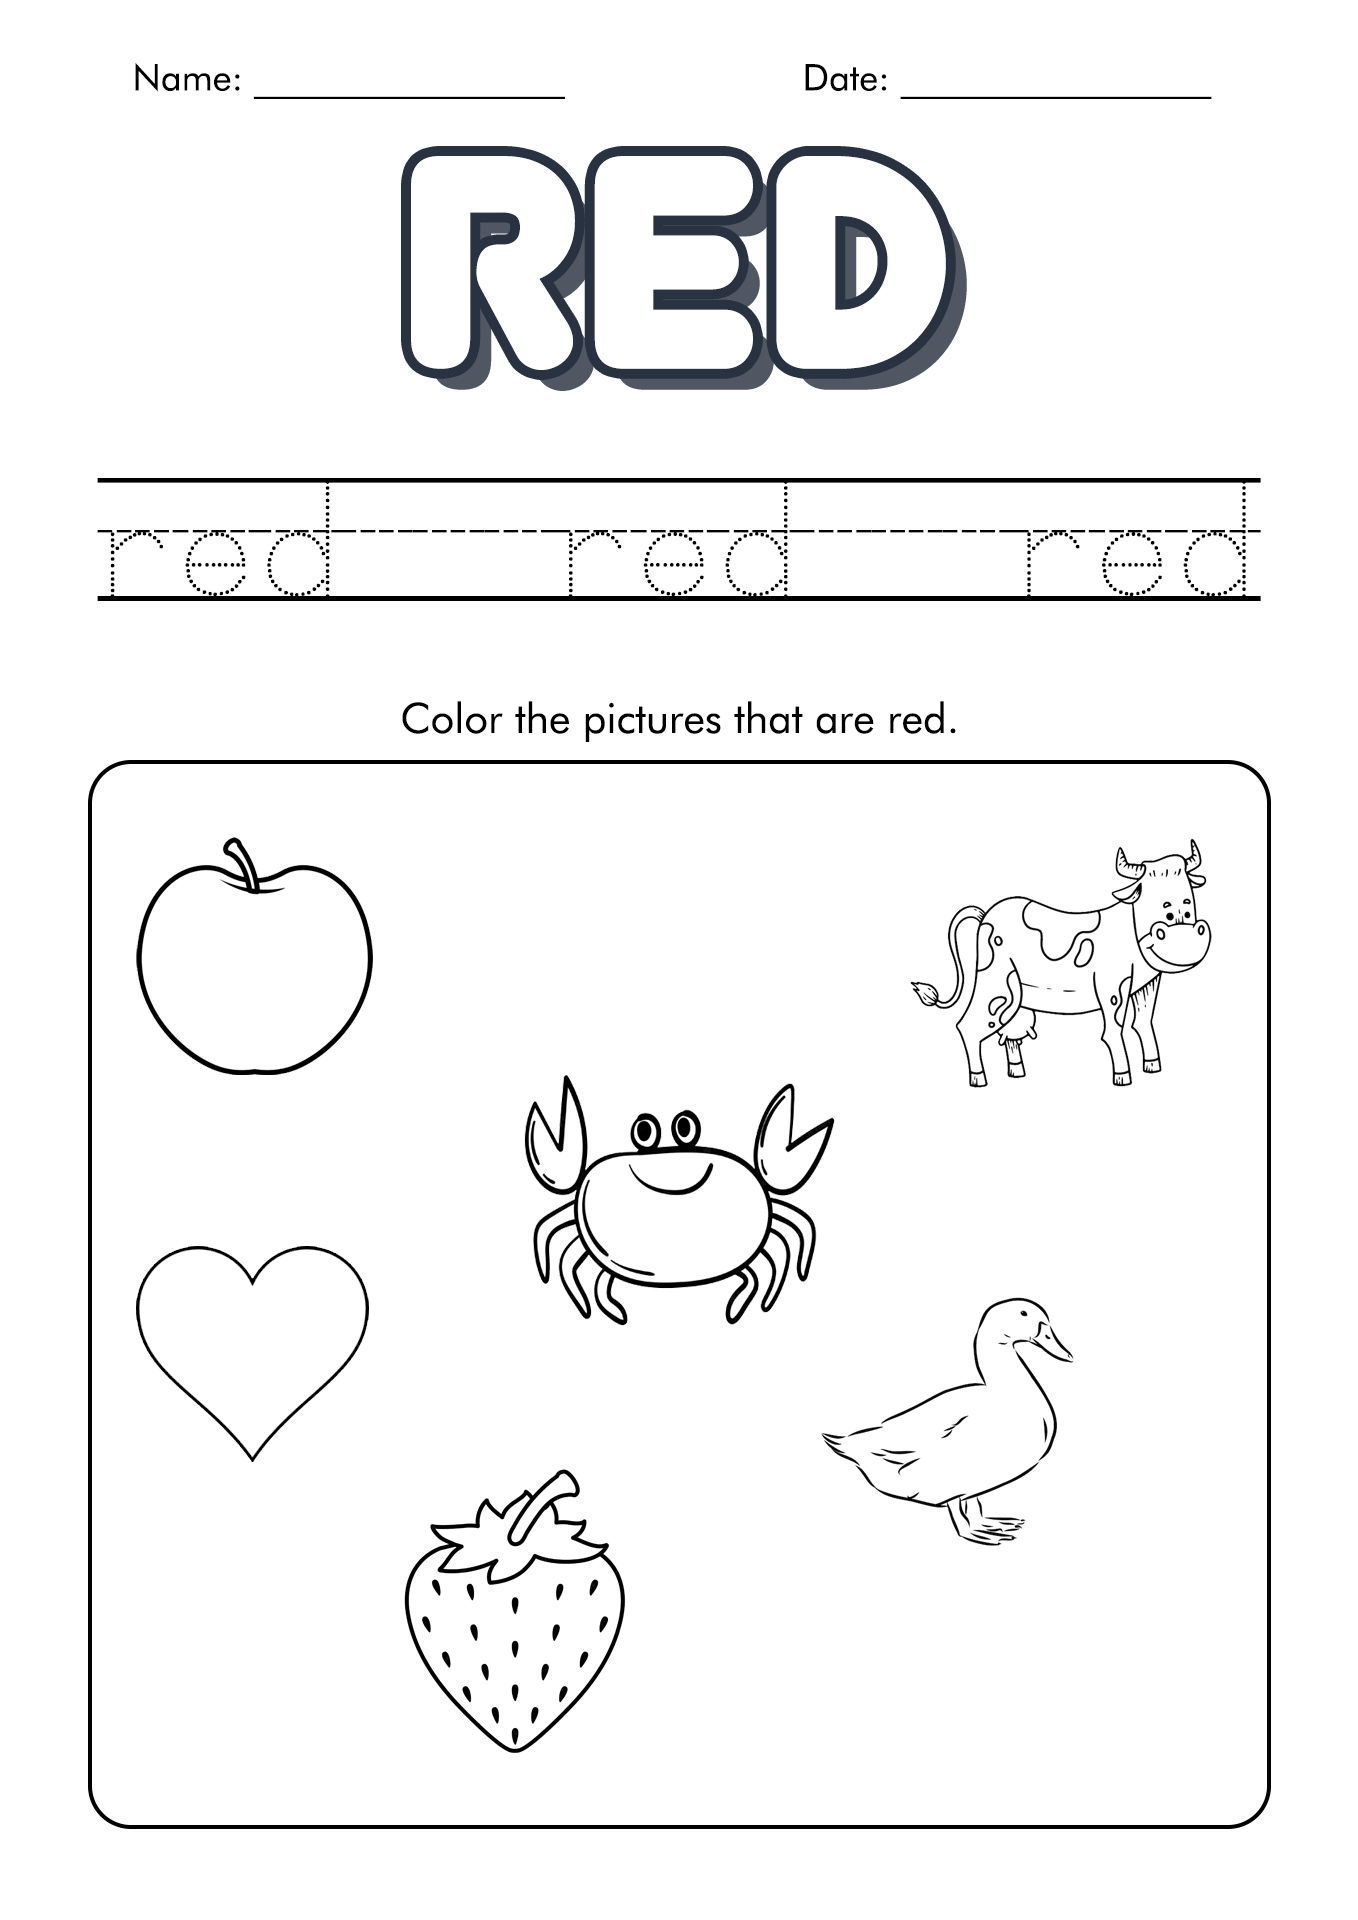 10-best-images-of-red-color-worksheets-printable-color-red-worksheets-printable-color-red